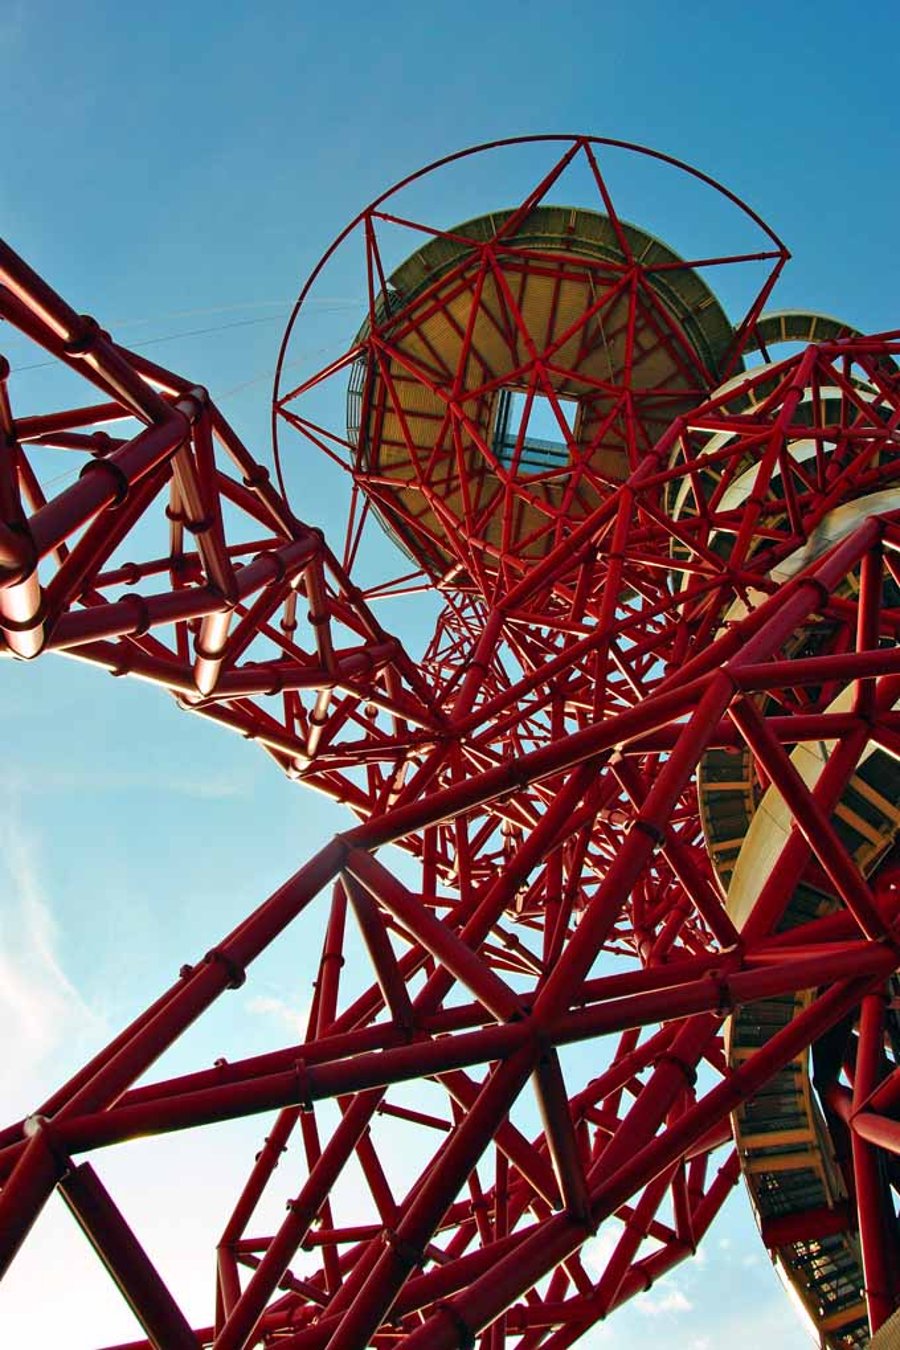 2012 Olympics ArcelorMittal Orbit Tower Photograph Print